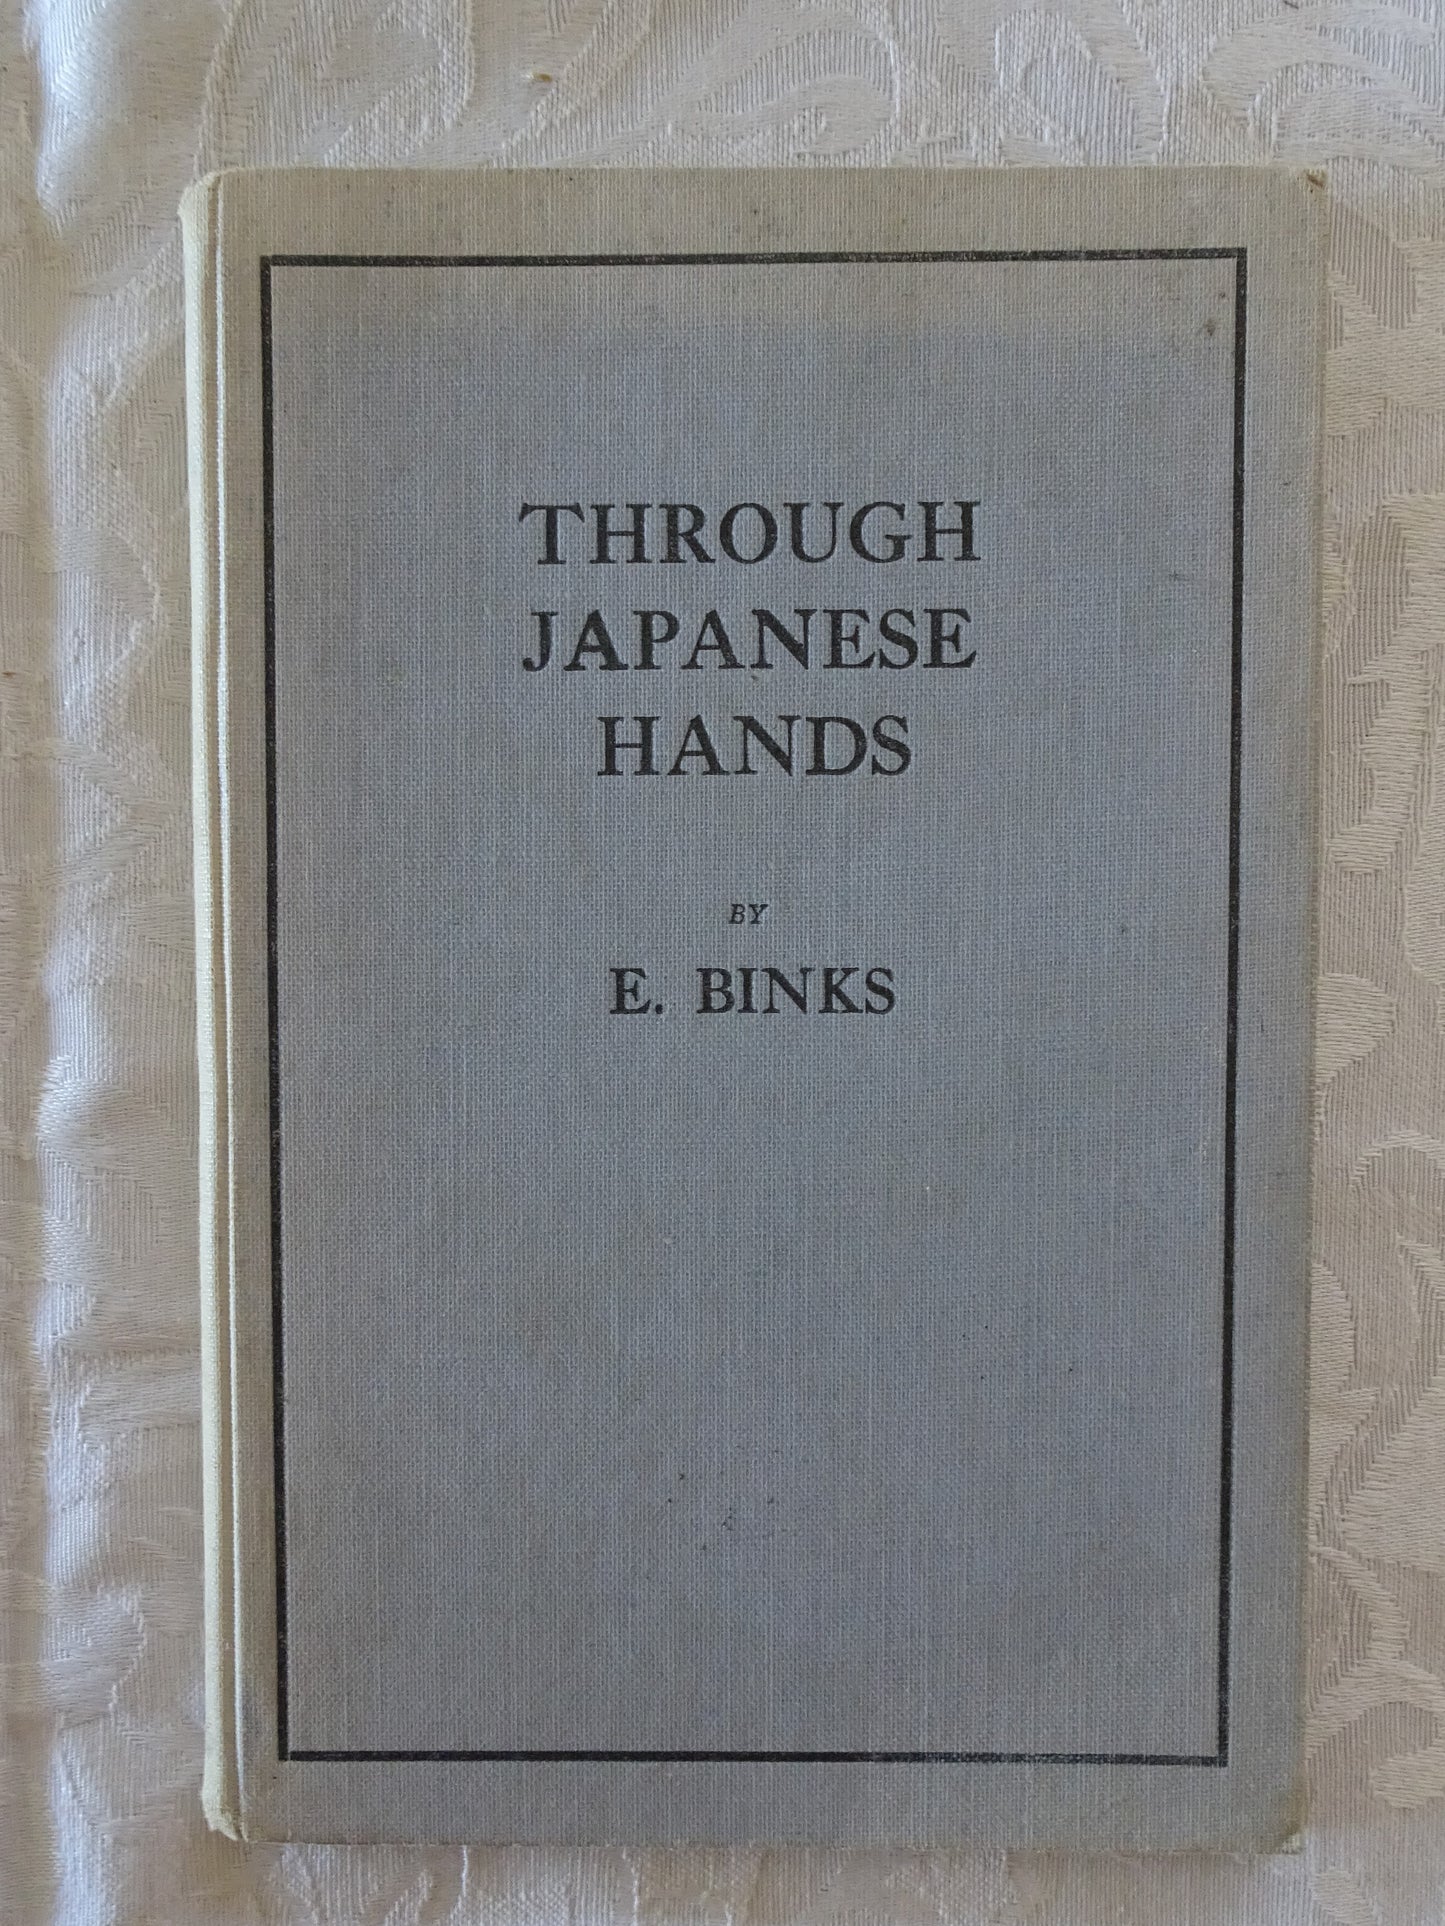 Through Japanese Hands by E. Binks